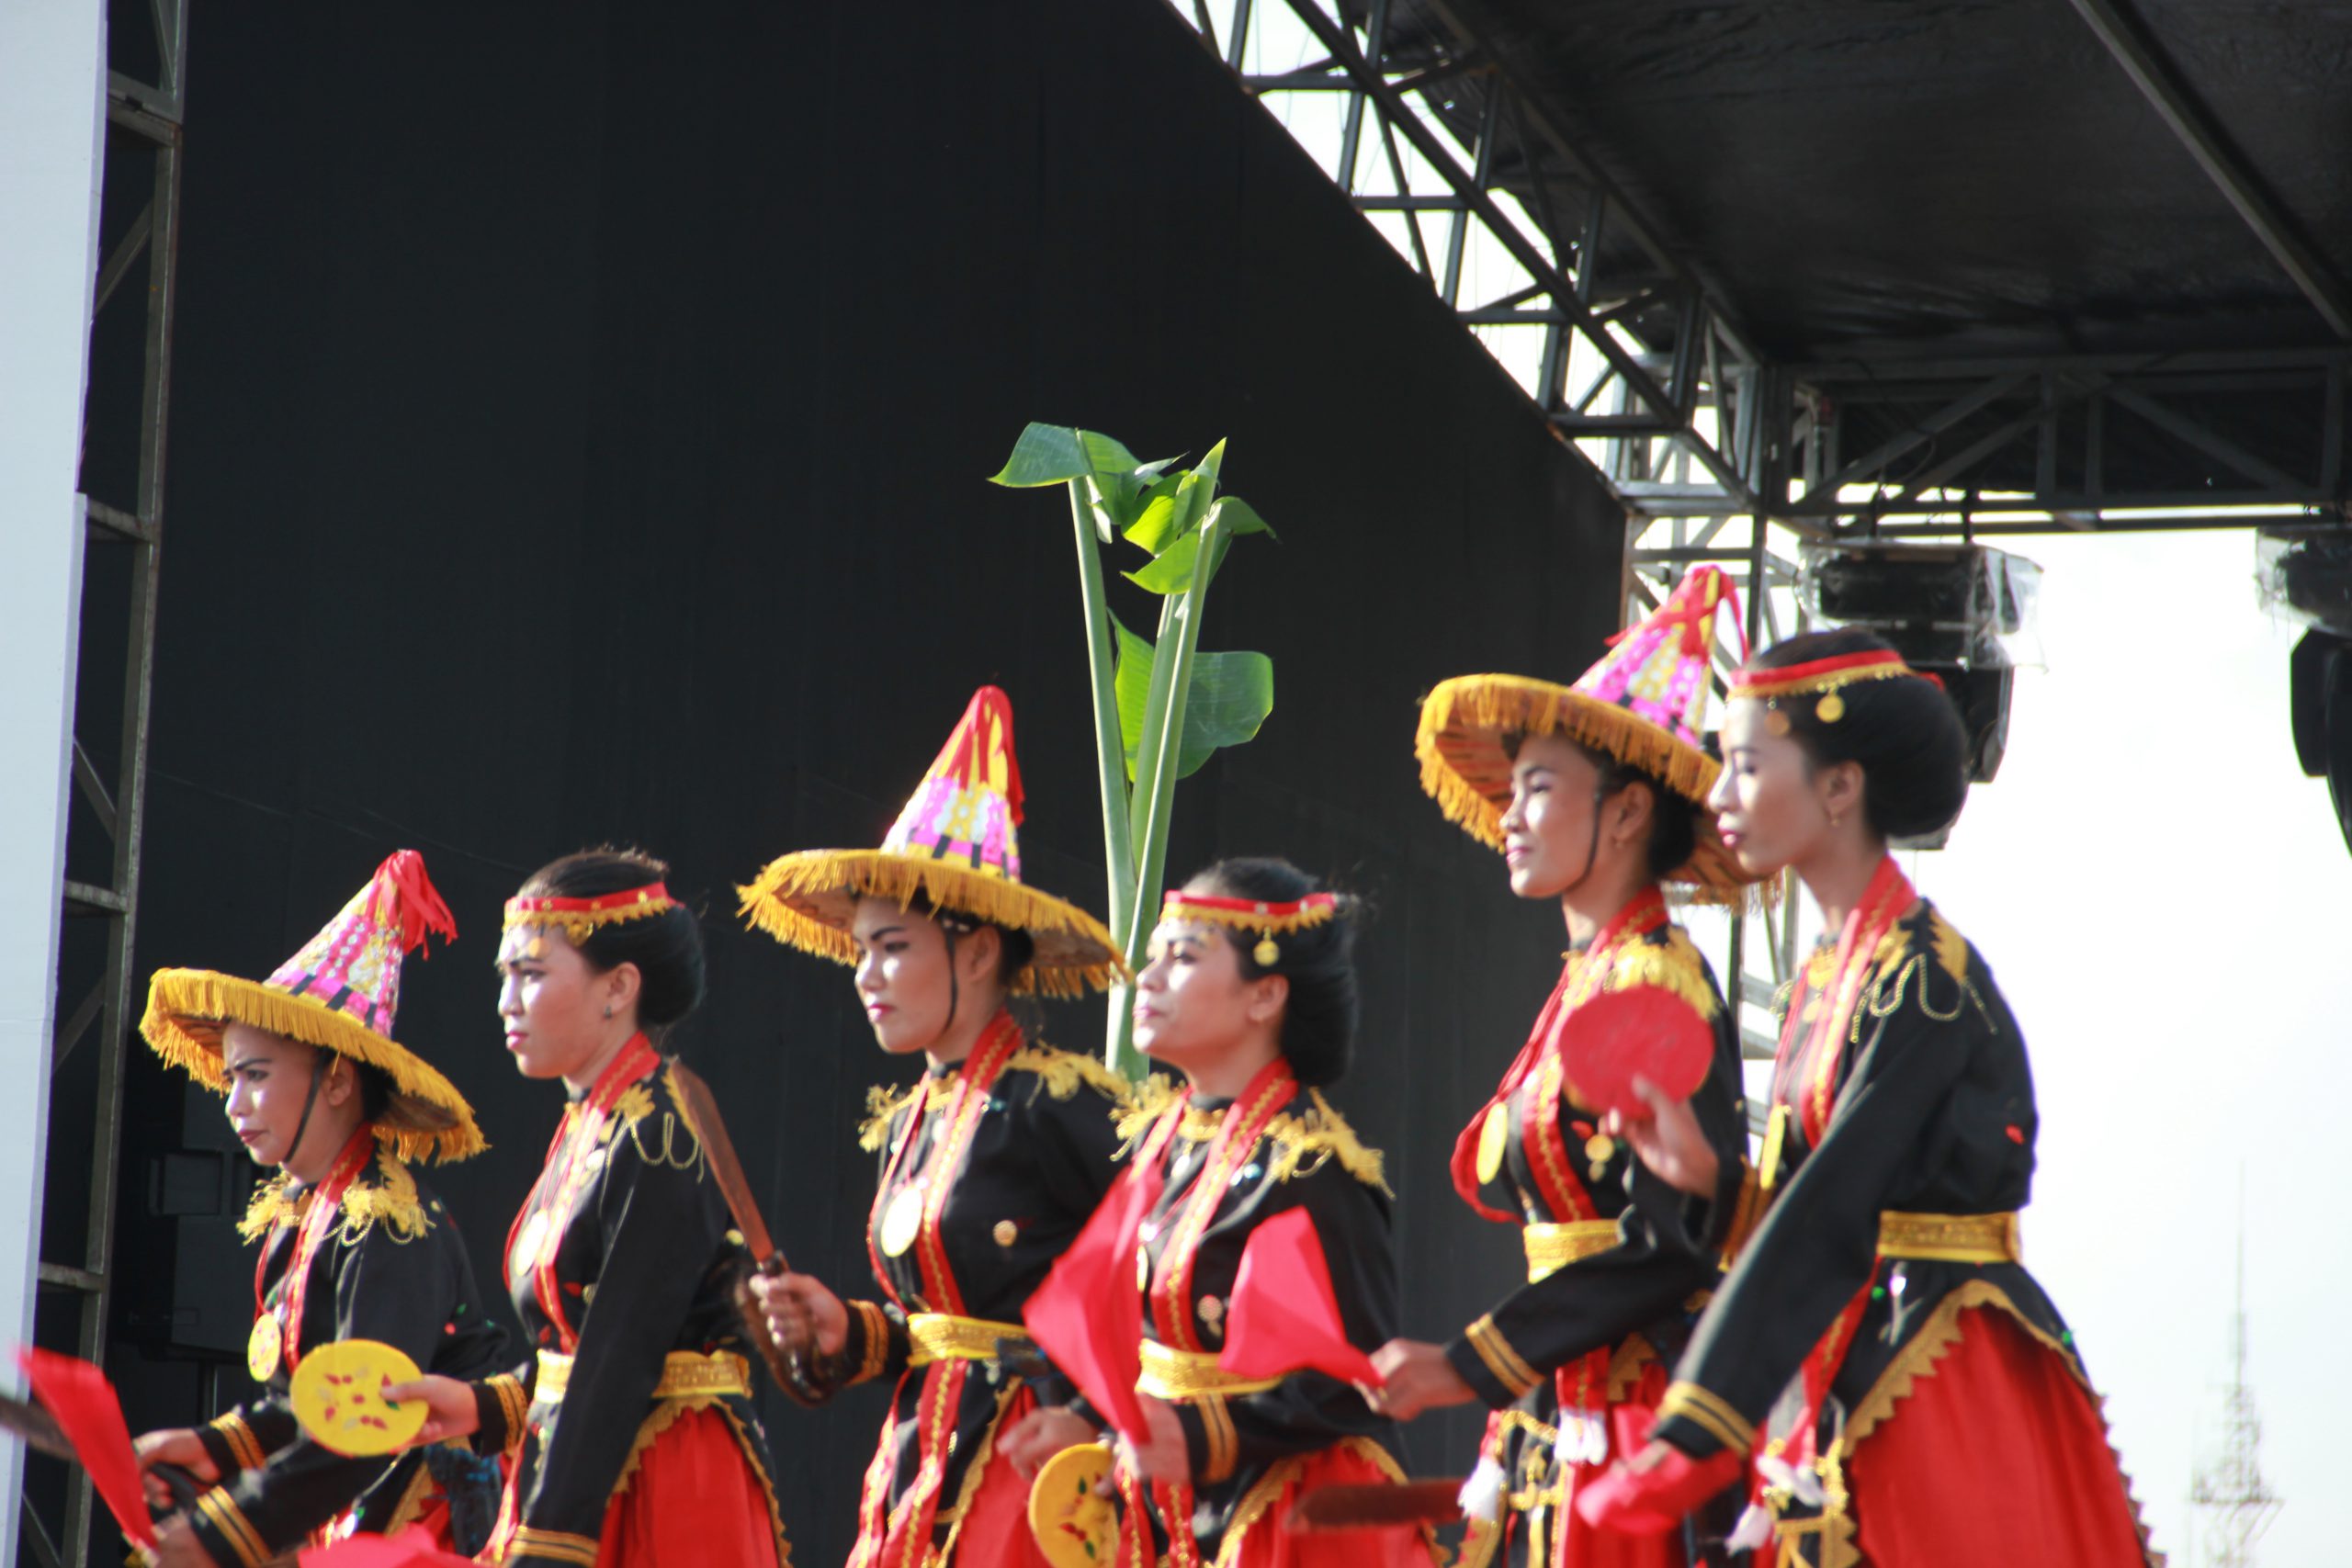 Secara umum tari Lummense dipentaskan oleh 12 orang, 6 laki-laki dan 6 perempuan dengan mengenakan pakaian adat Sulawesi Tenggara